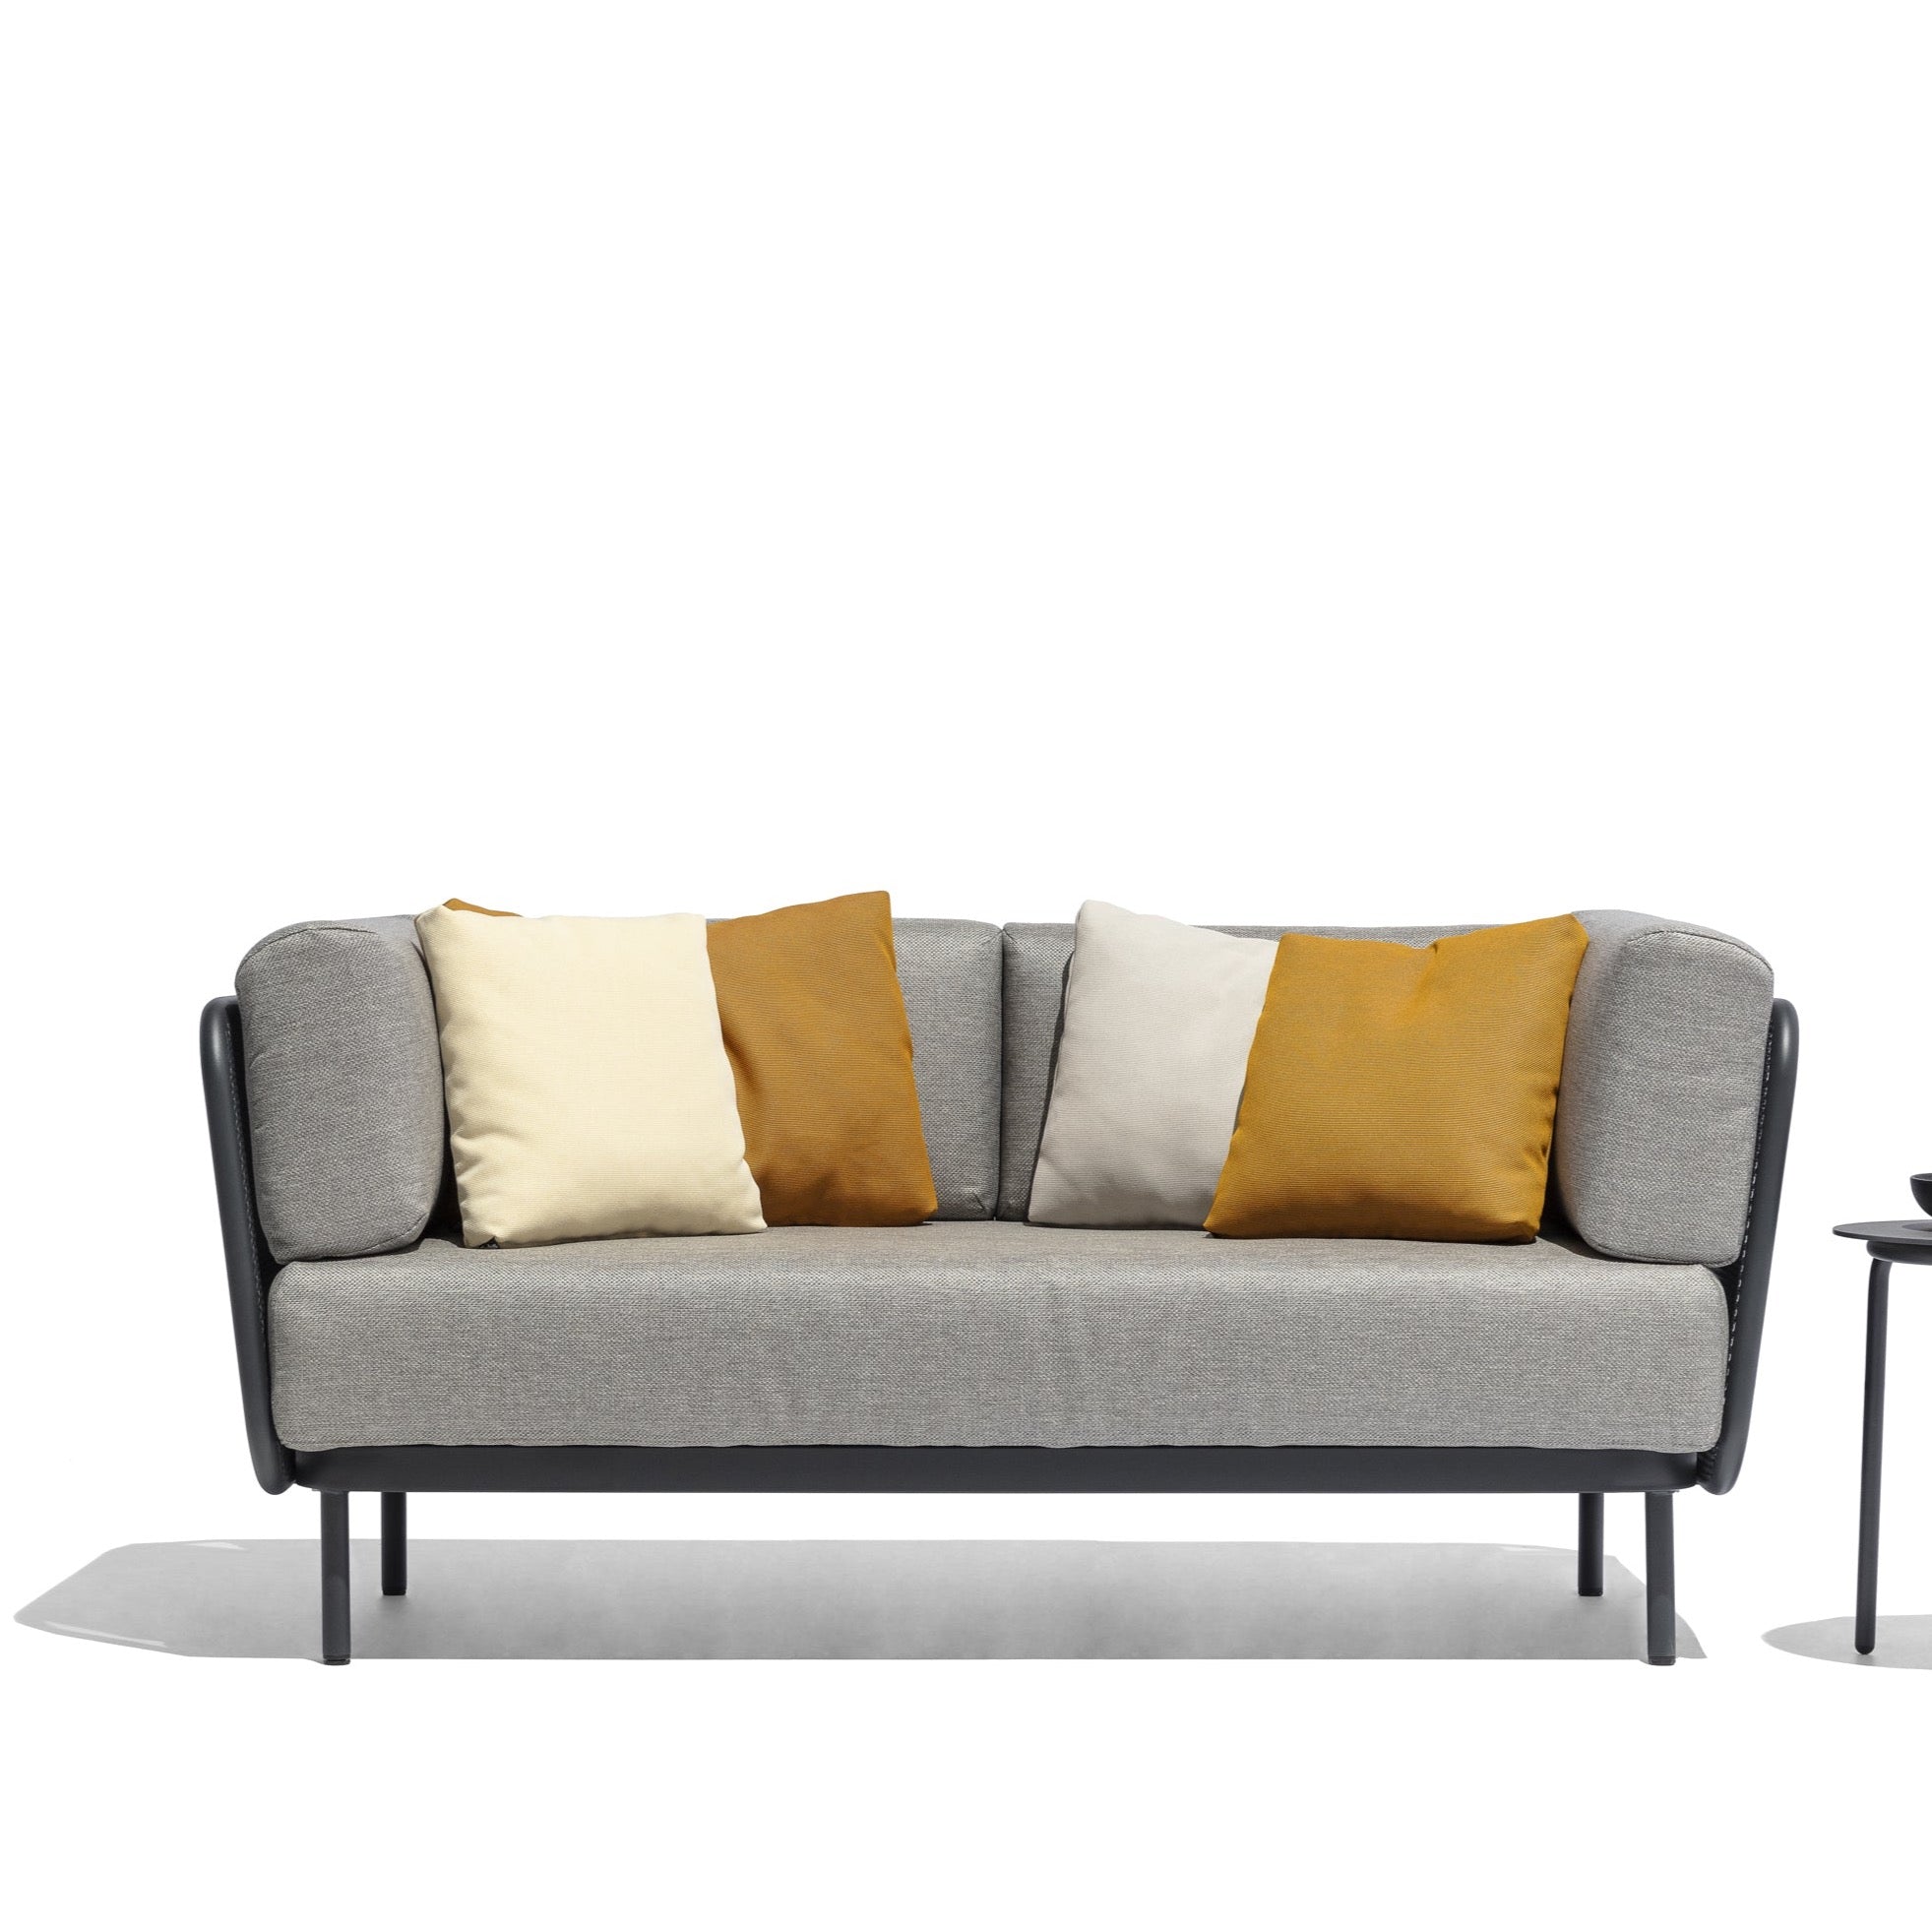 Todus Baza modular sofa 168 cm